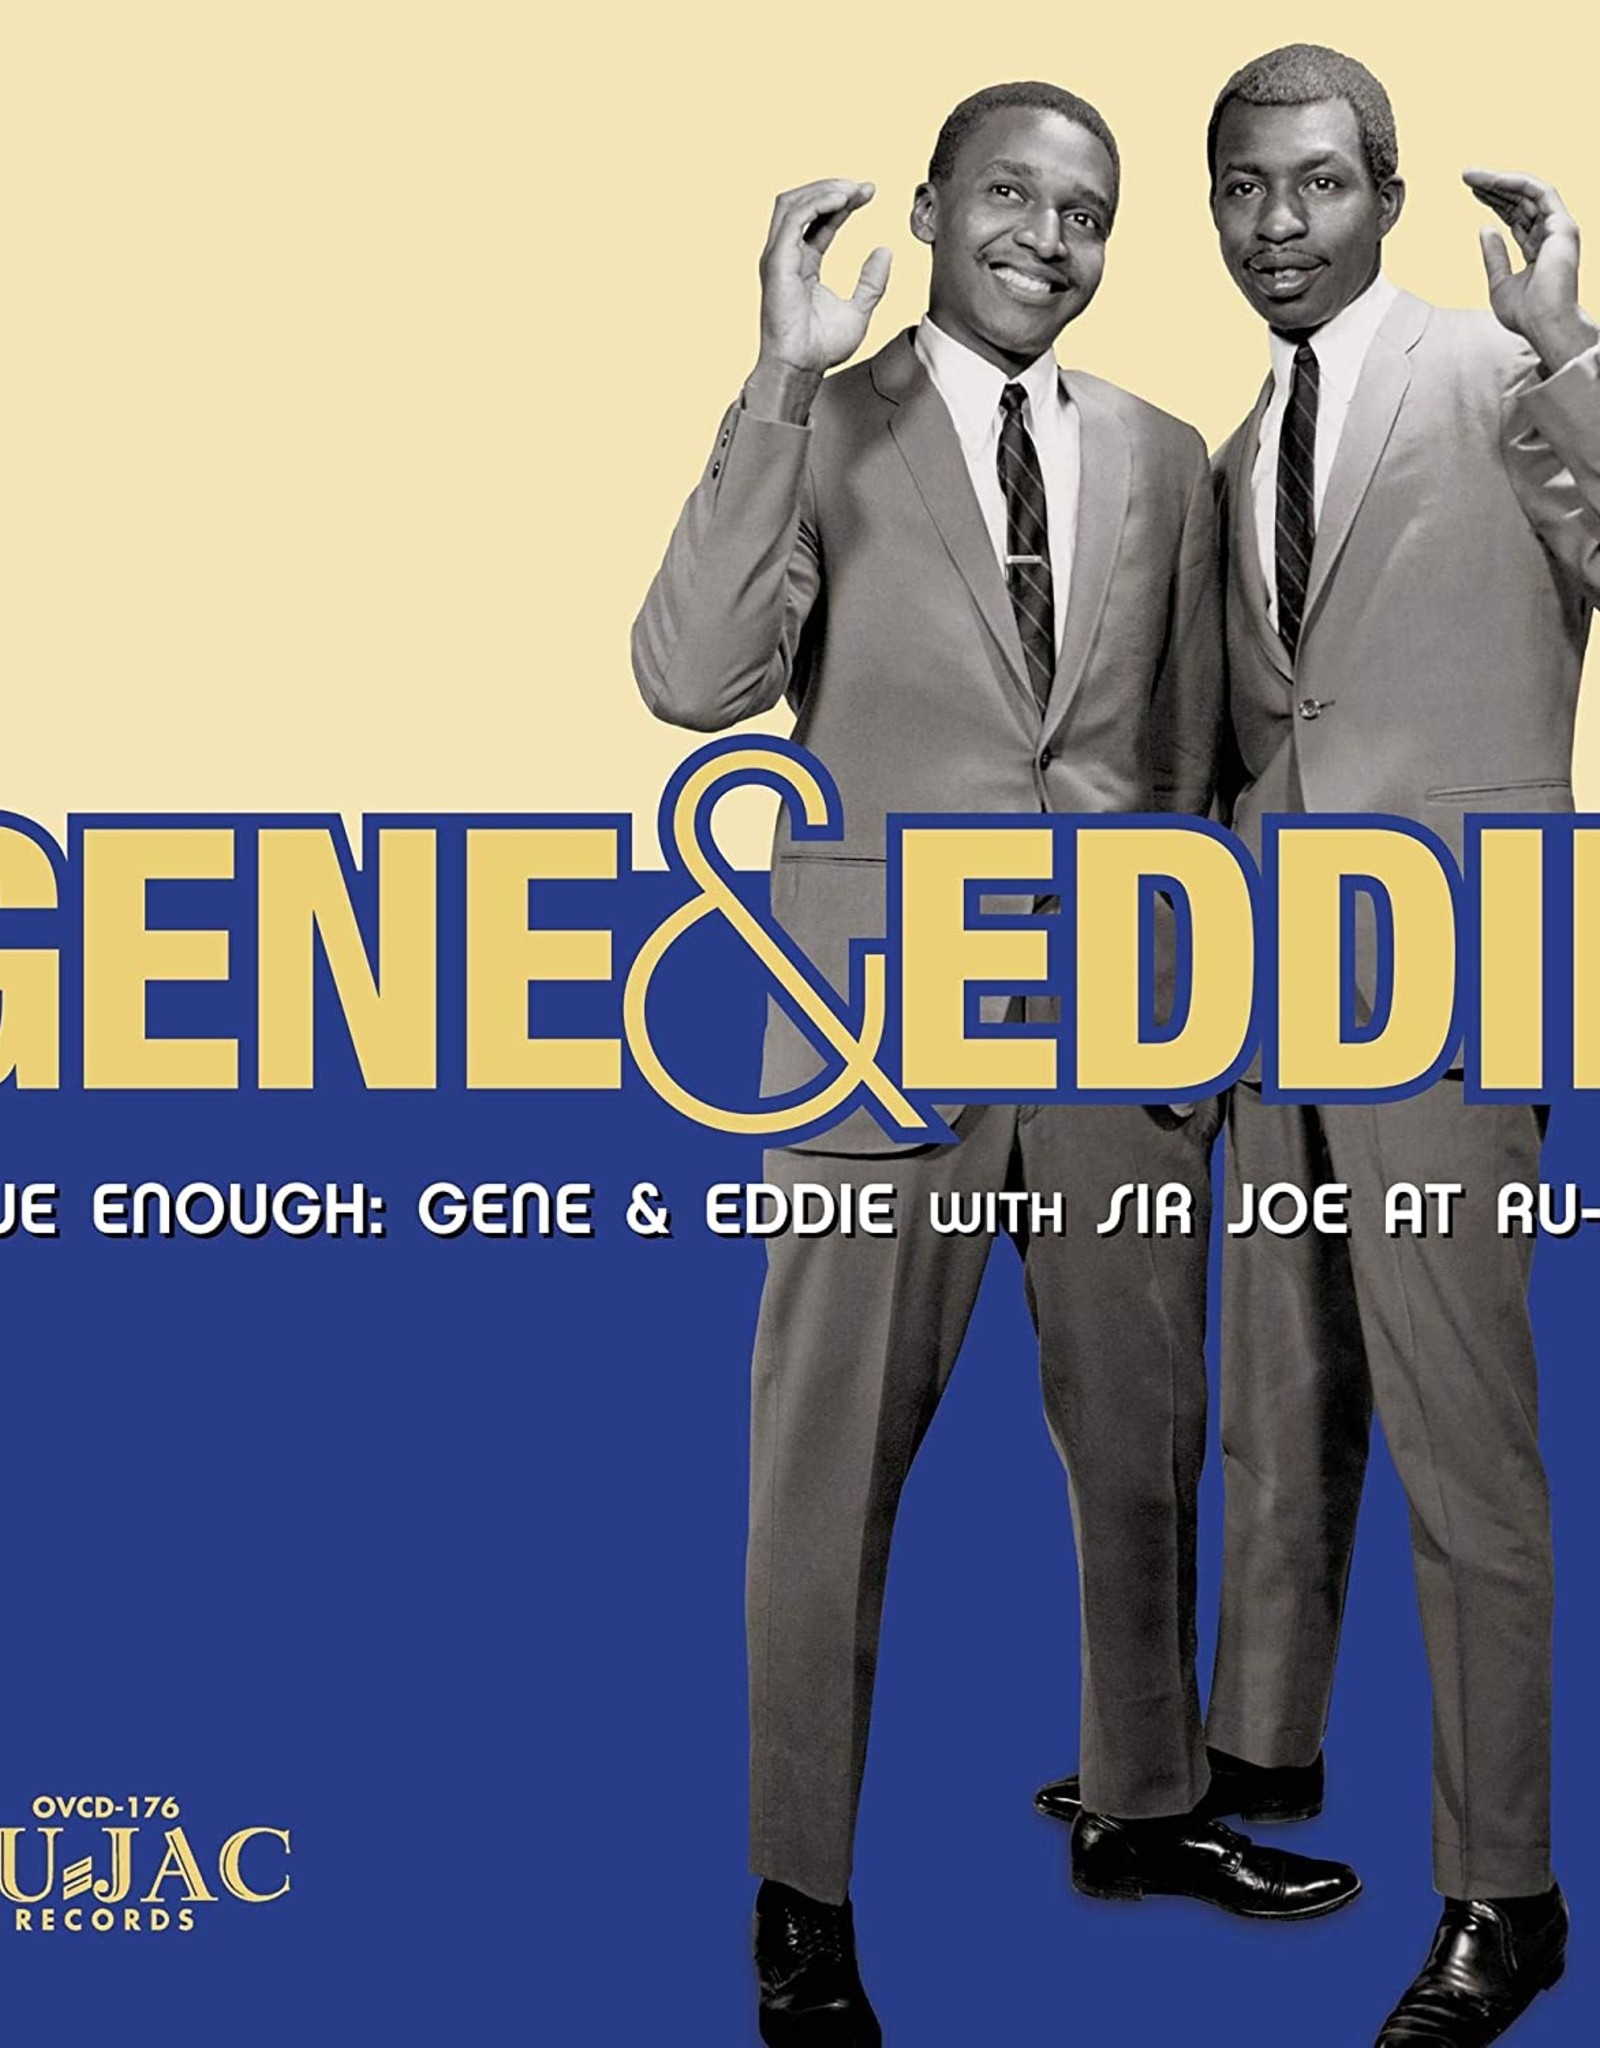 Gene & Eddie - True Enough: Gene & Eddie With